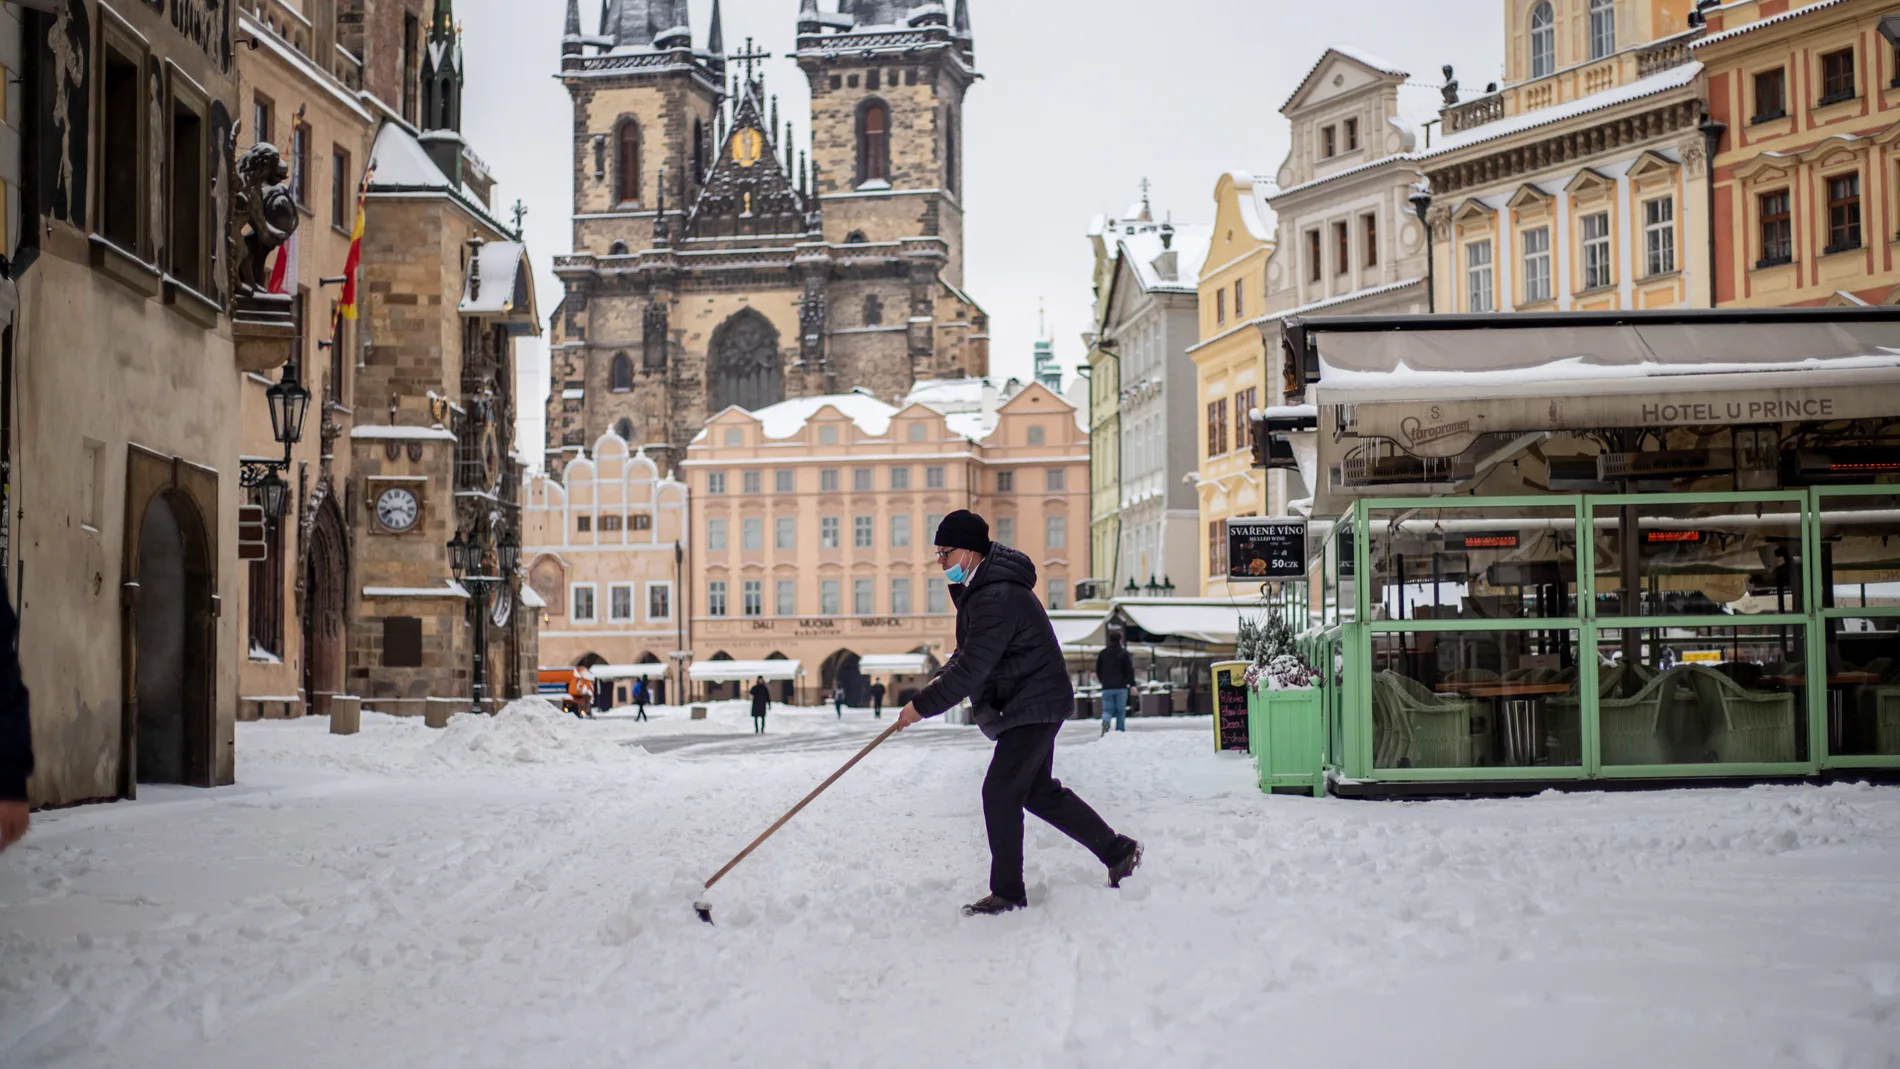 Praga completamente nevada este lunes